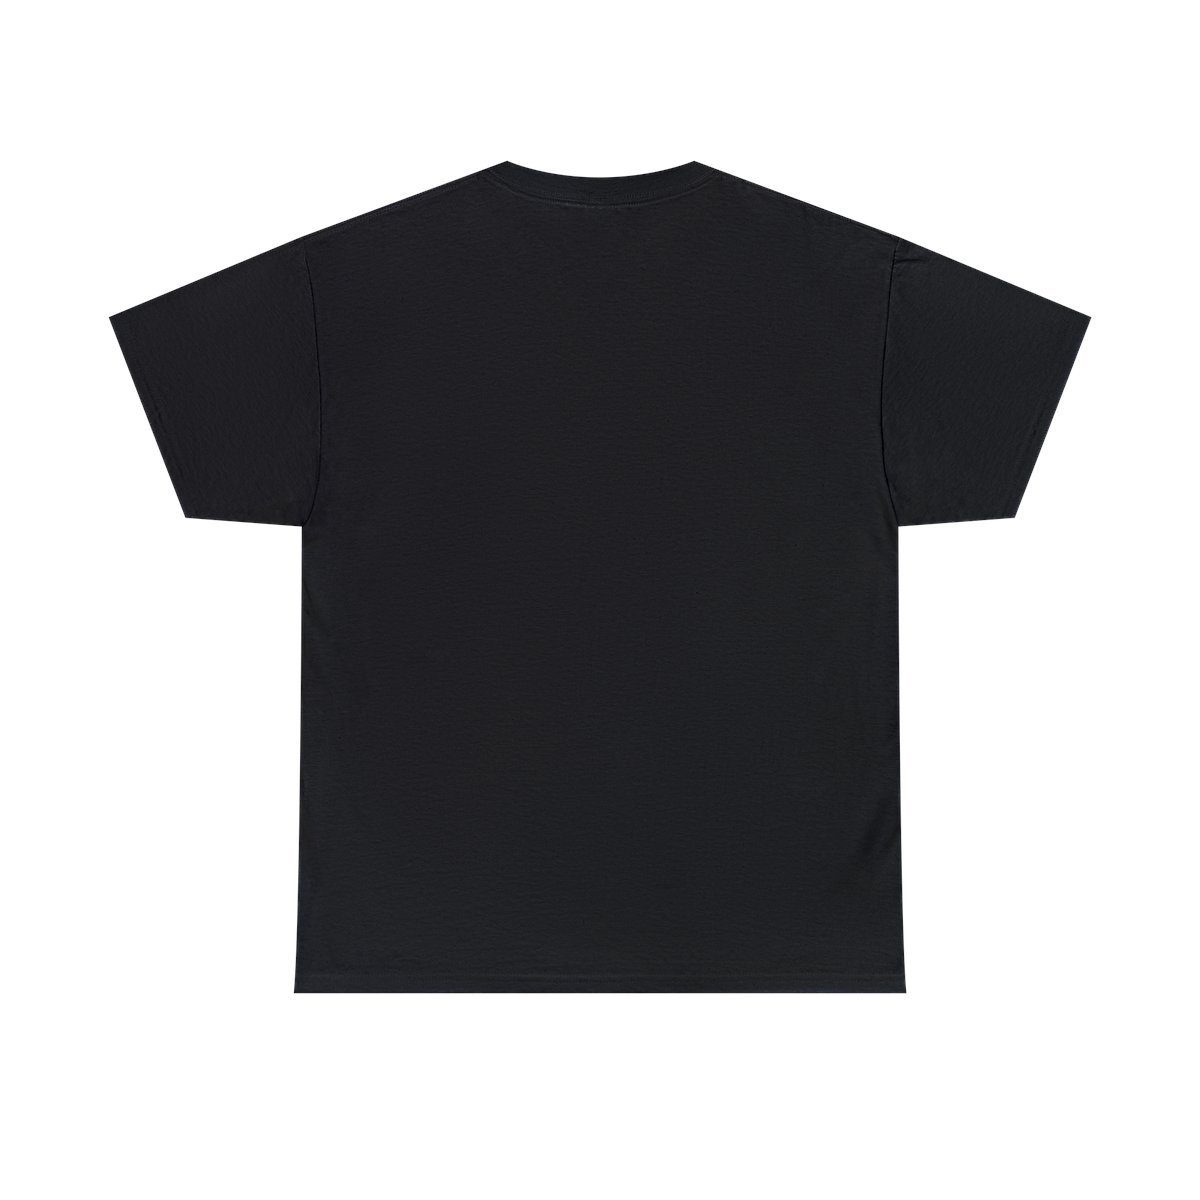 AfterWinter – Paramnesia Short Sleeve T-shirt